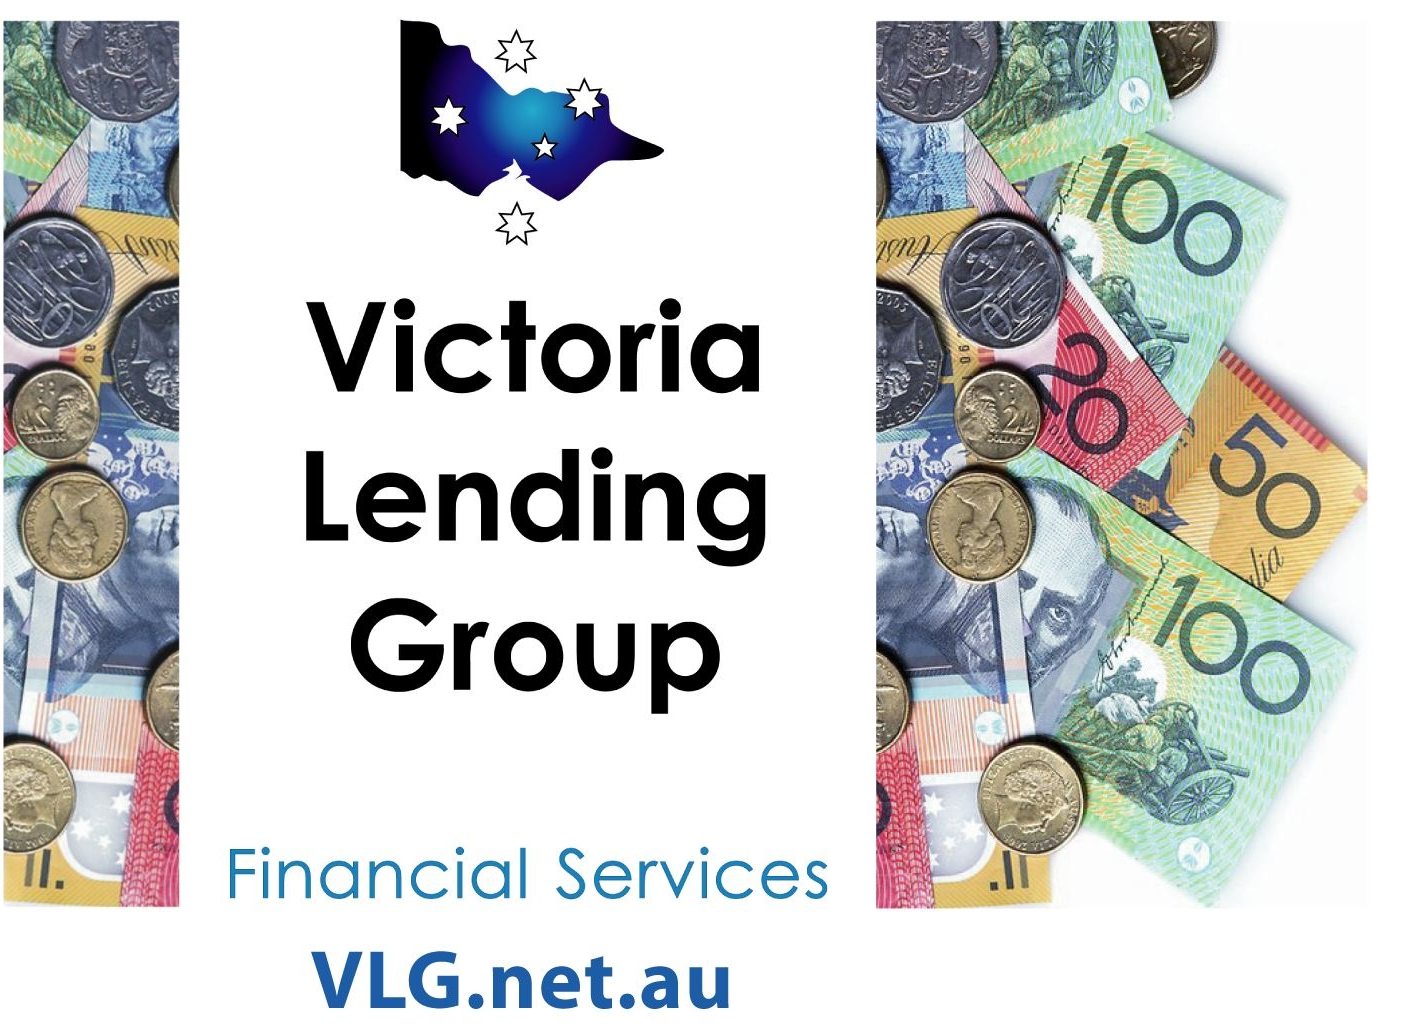 Victoria Lending Group